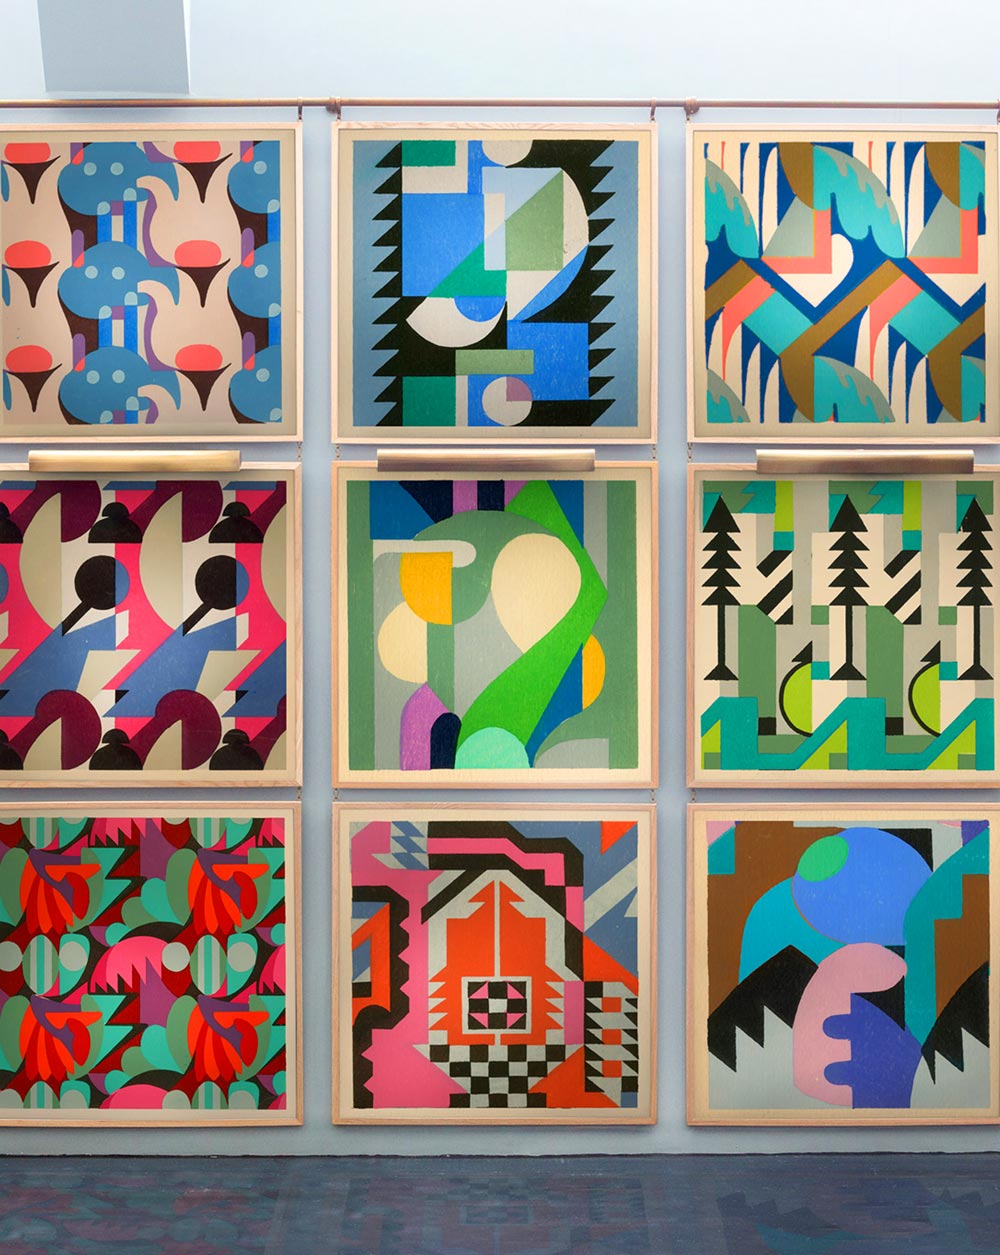 Kaleidoscope editions on gallery wall